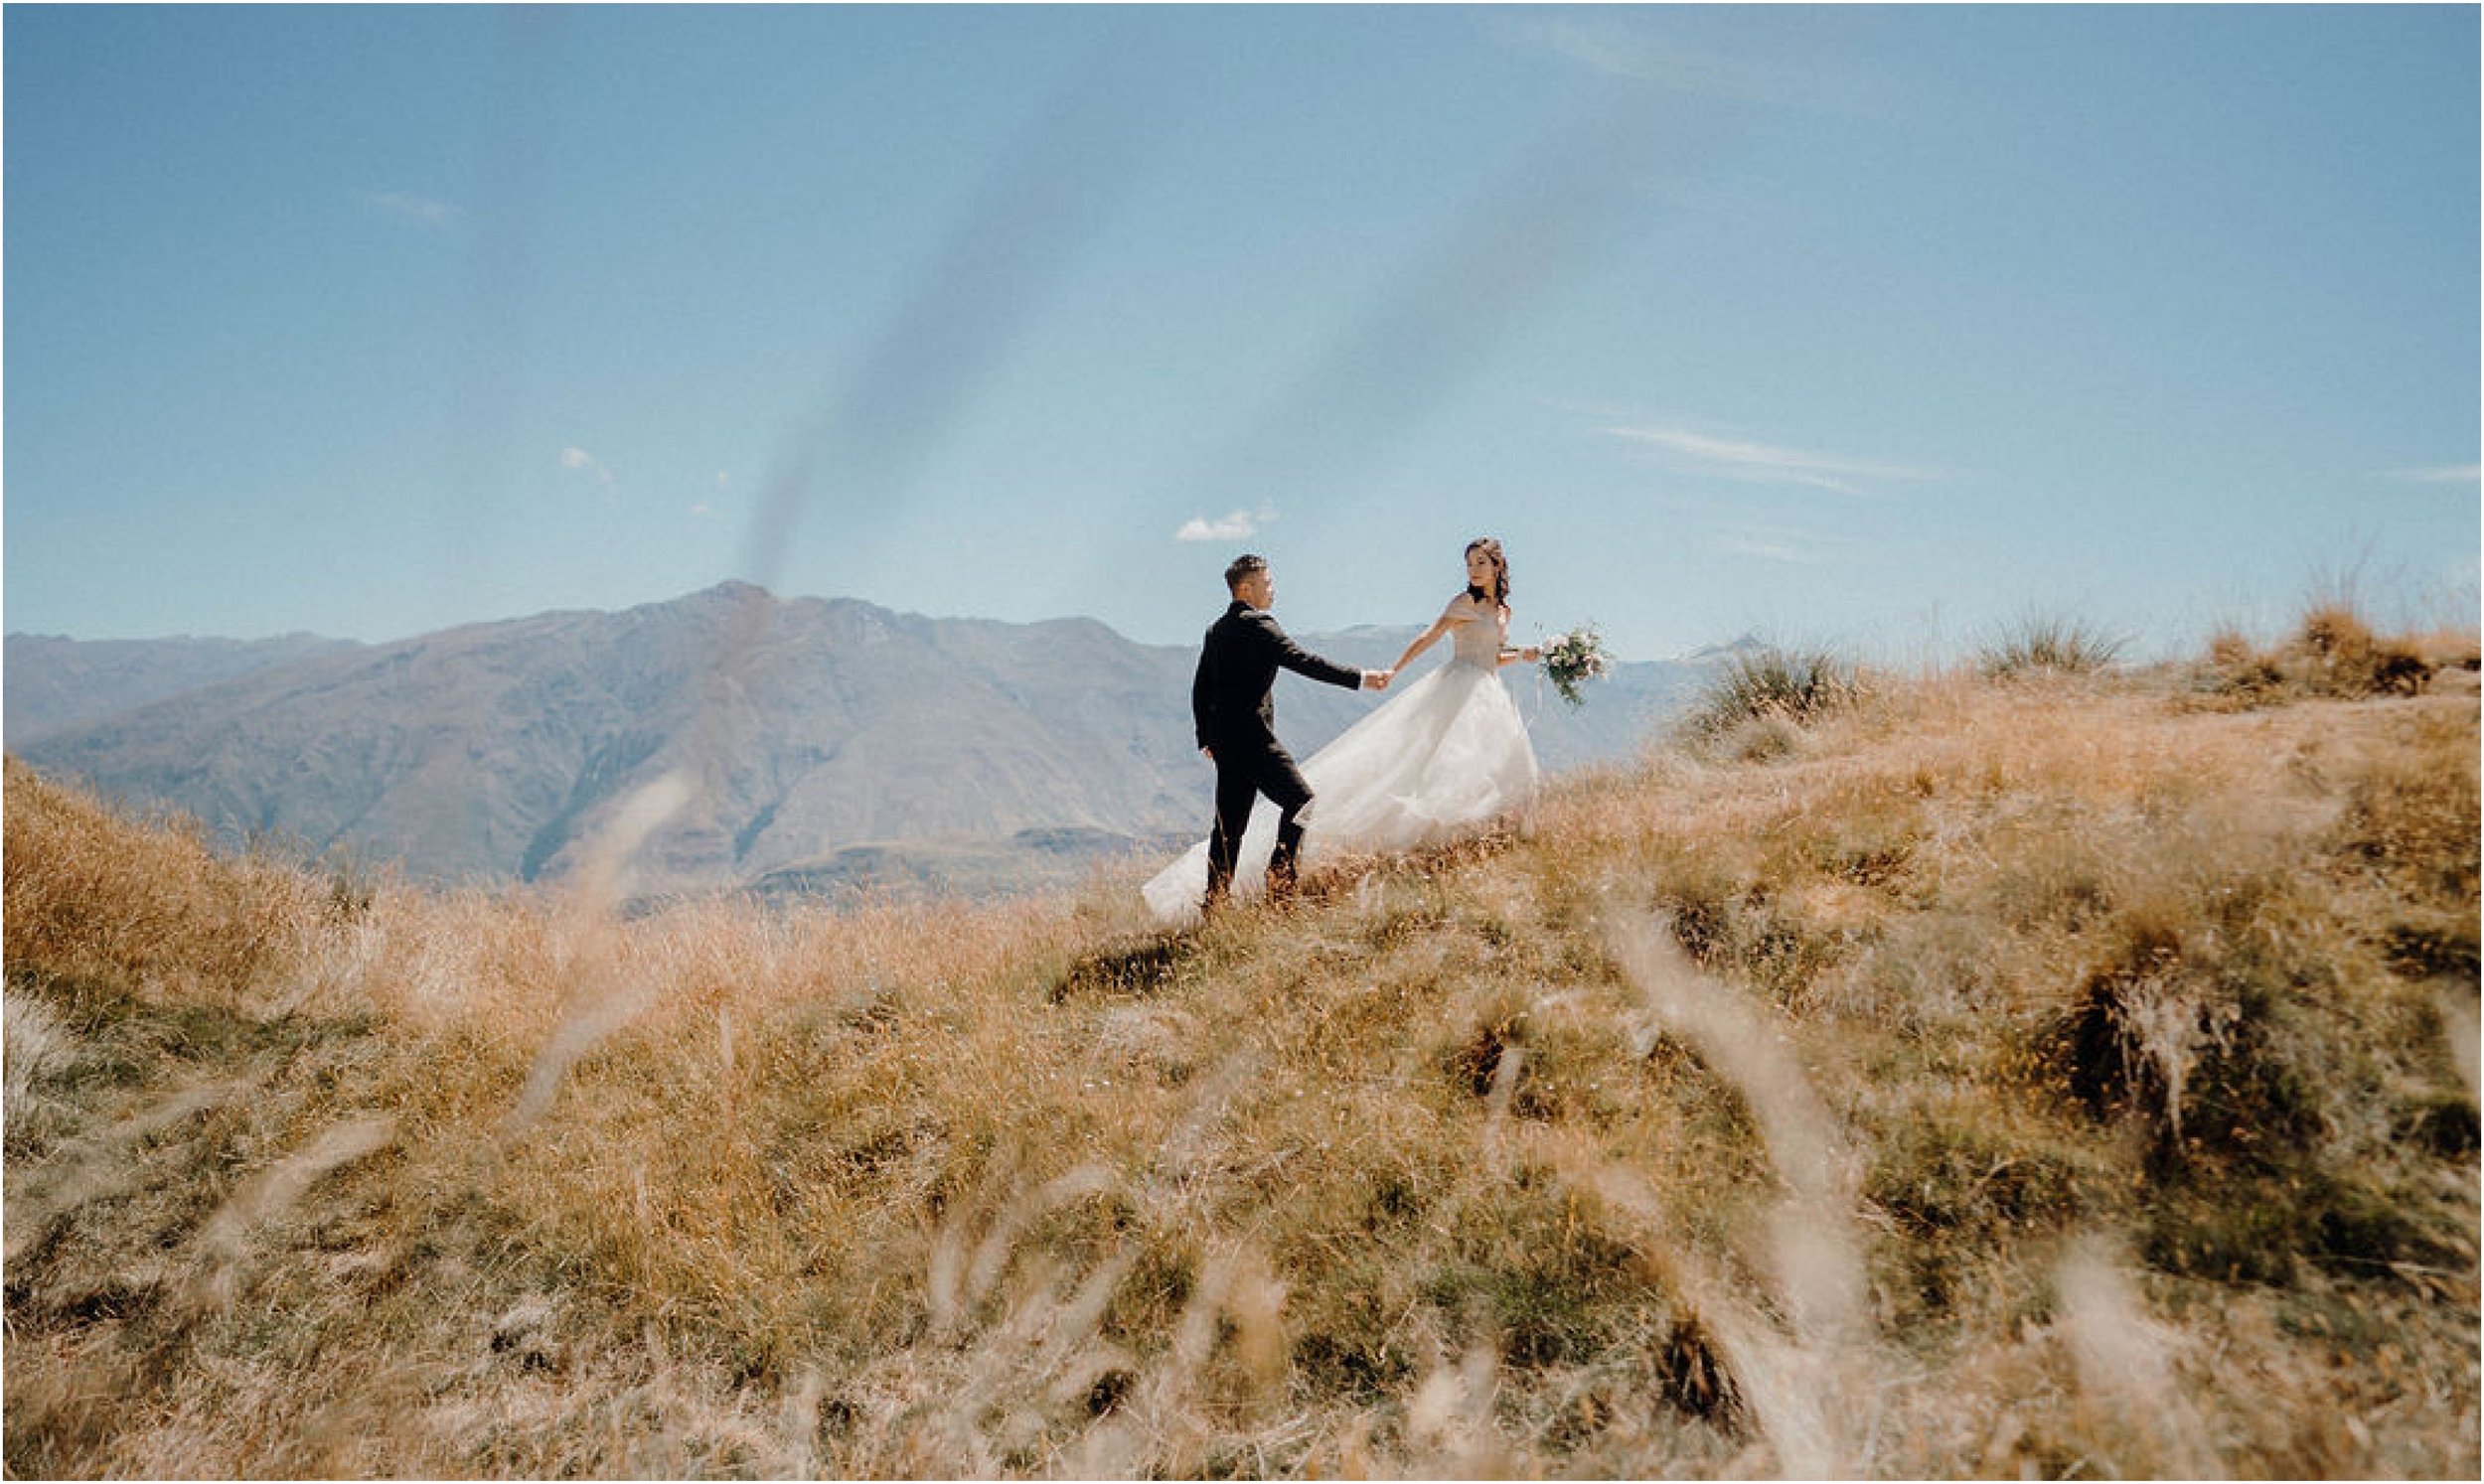 Kouki+Auckland+Wedding+Photographer+New+Zealand+Queenstown+Wedding+Prewedding+Elopement+NZ_0027.jpg